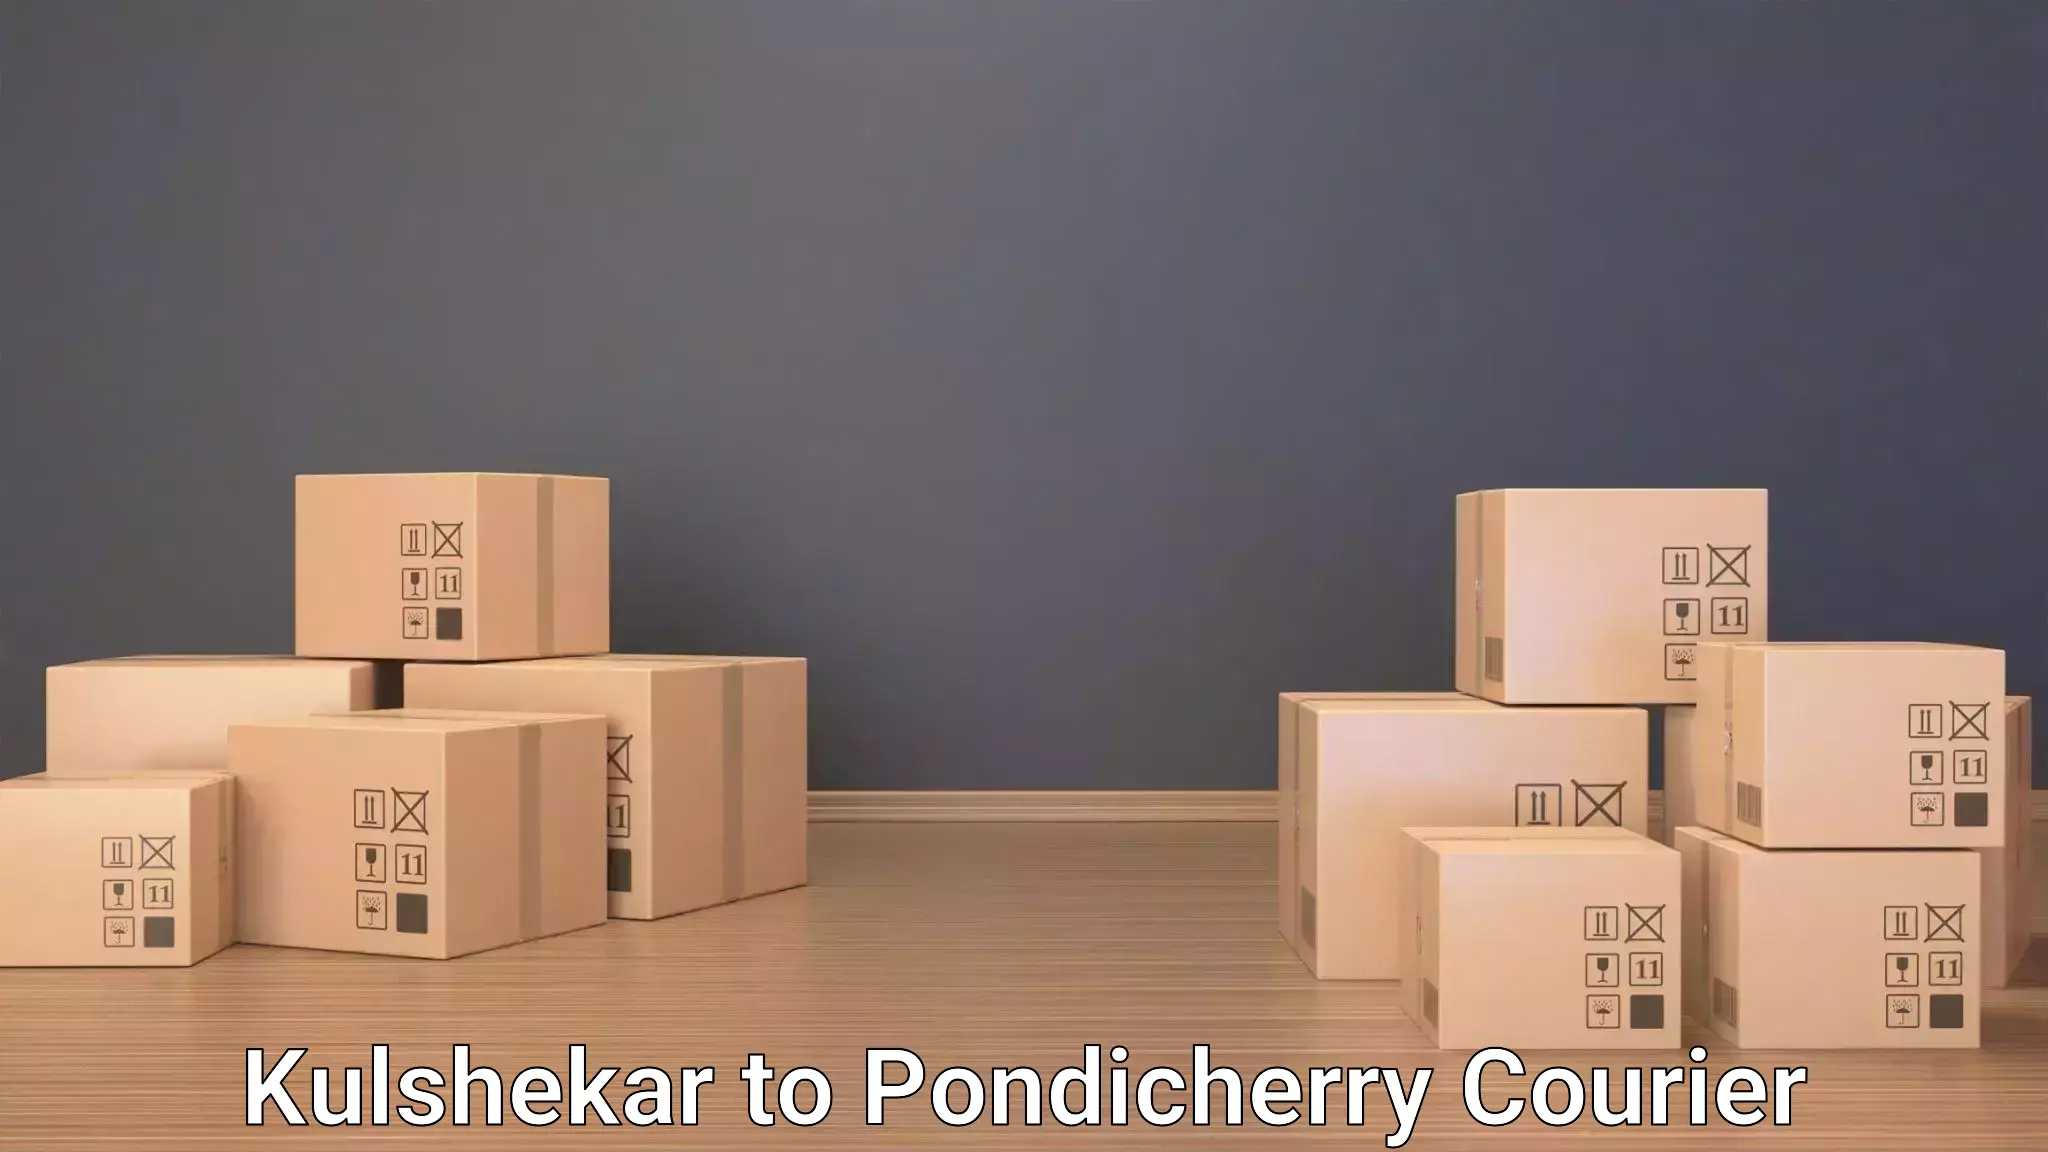 Luggage delivery news Kulshekar to Pondicherry